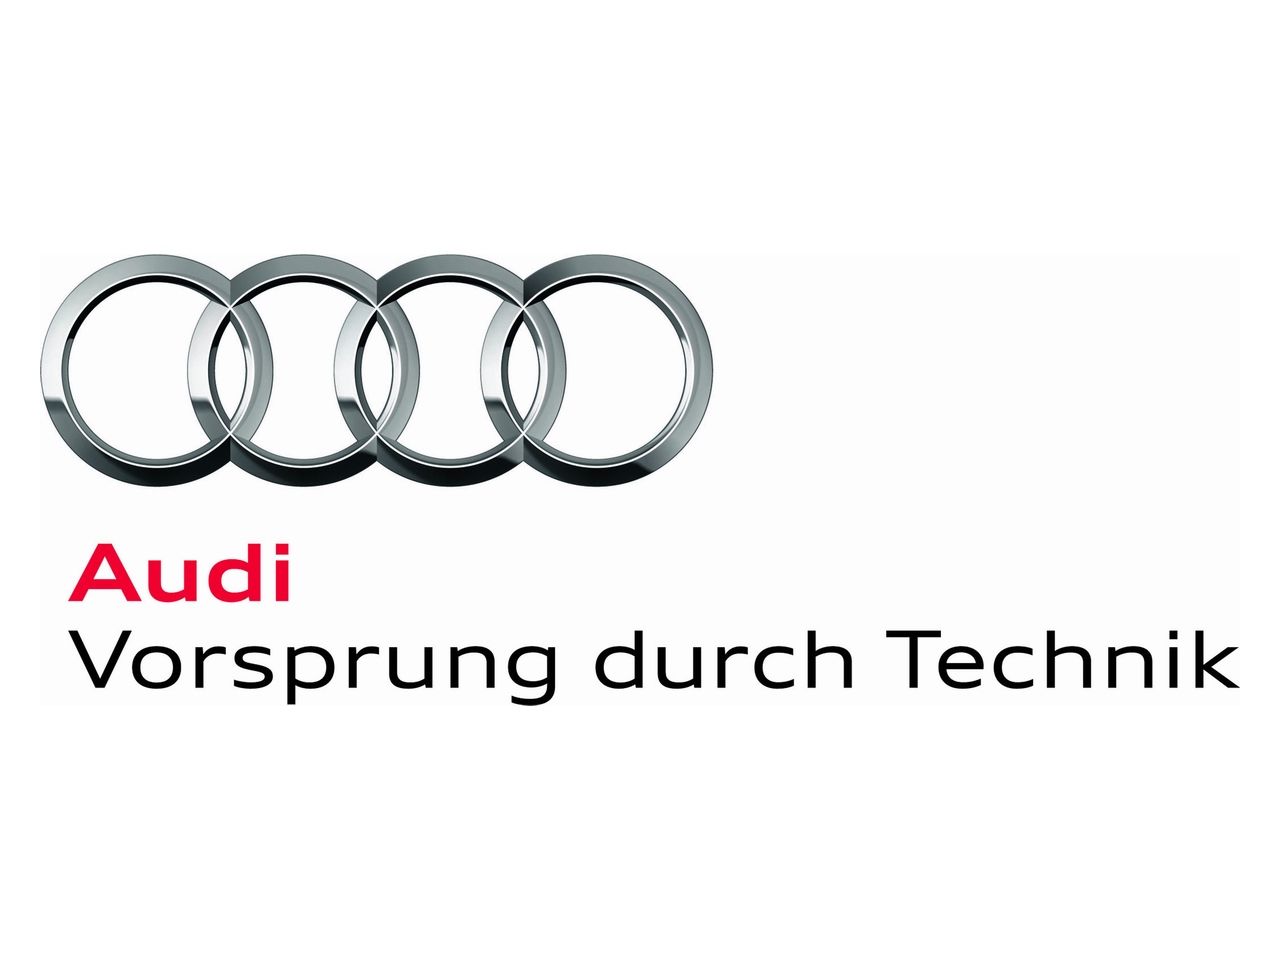 Audi Logo Meaning